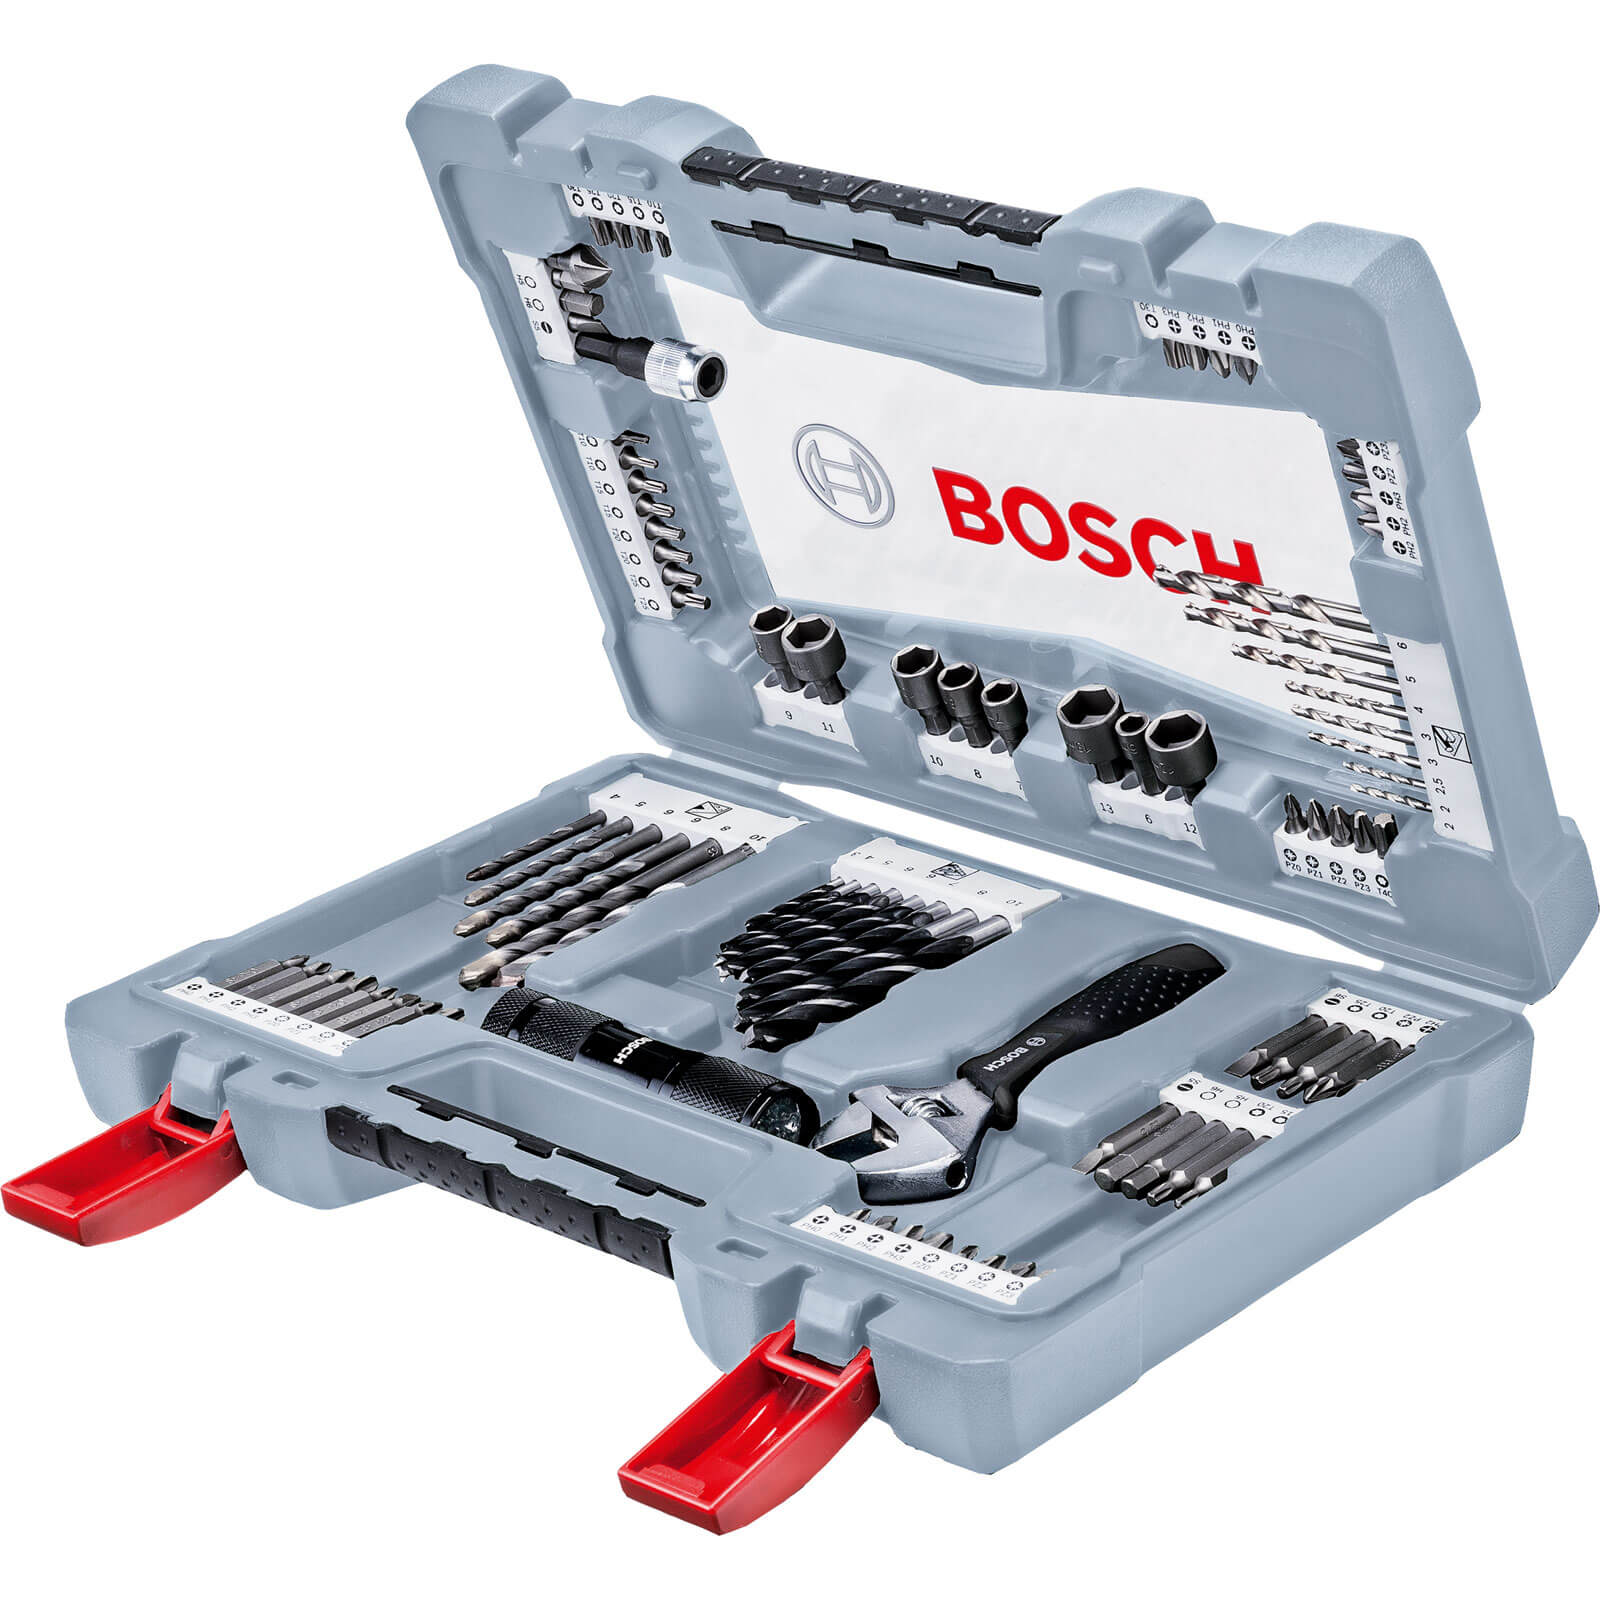 Bosch 91 Piece Premium Power Tool Accessory Drill and Screwdriver Bit Set